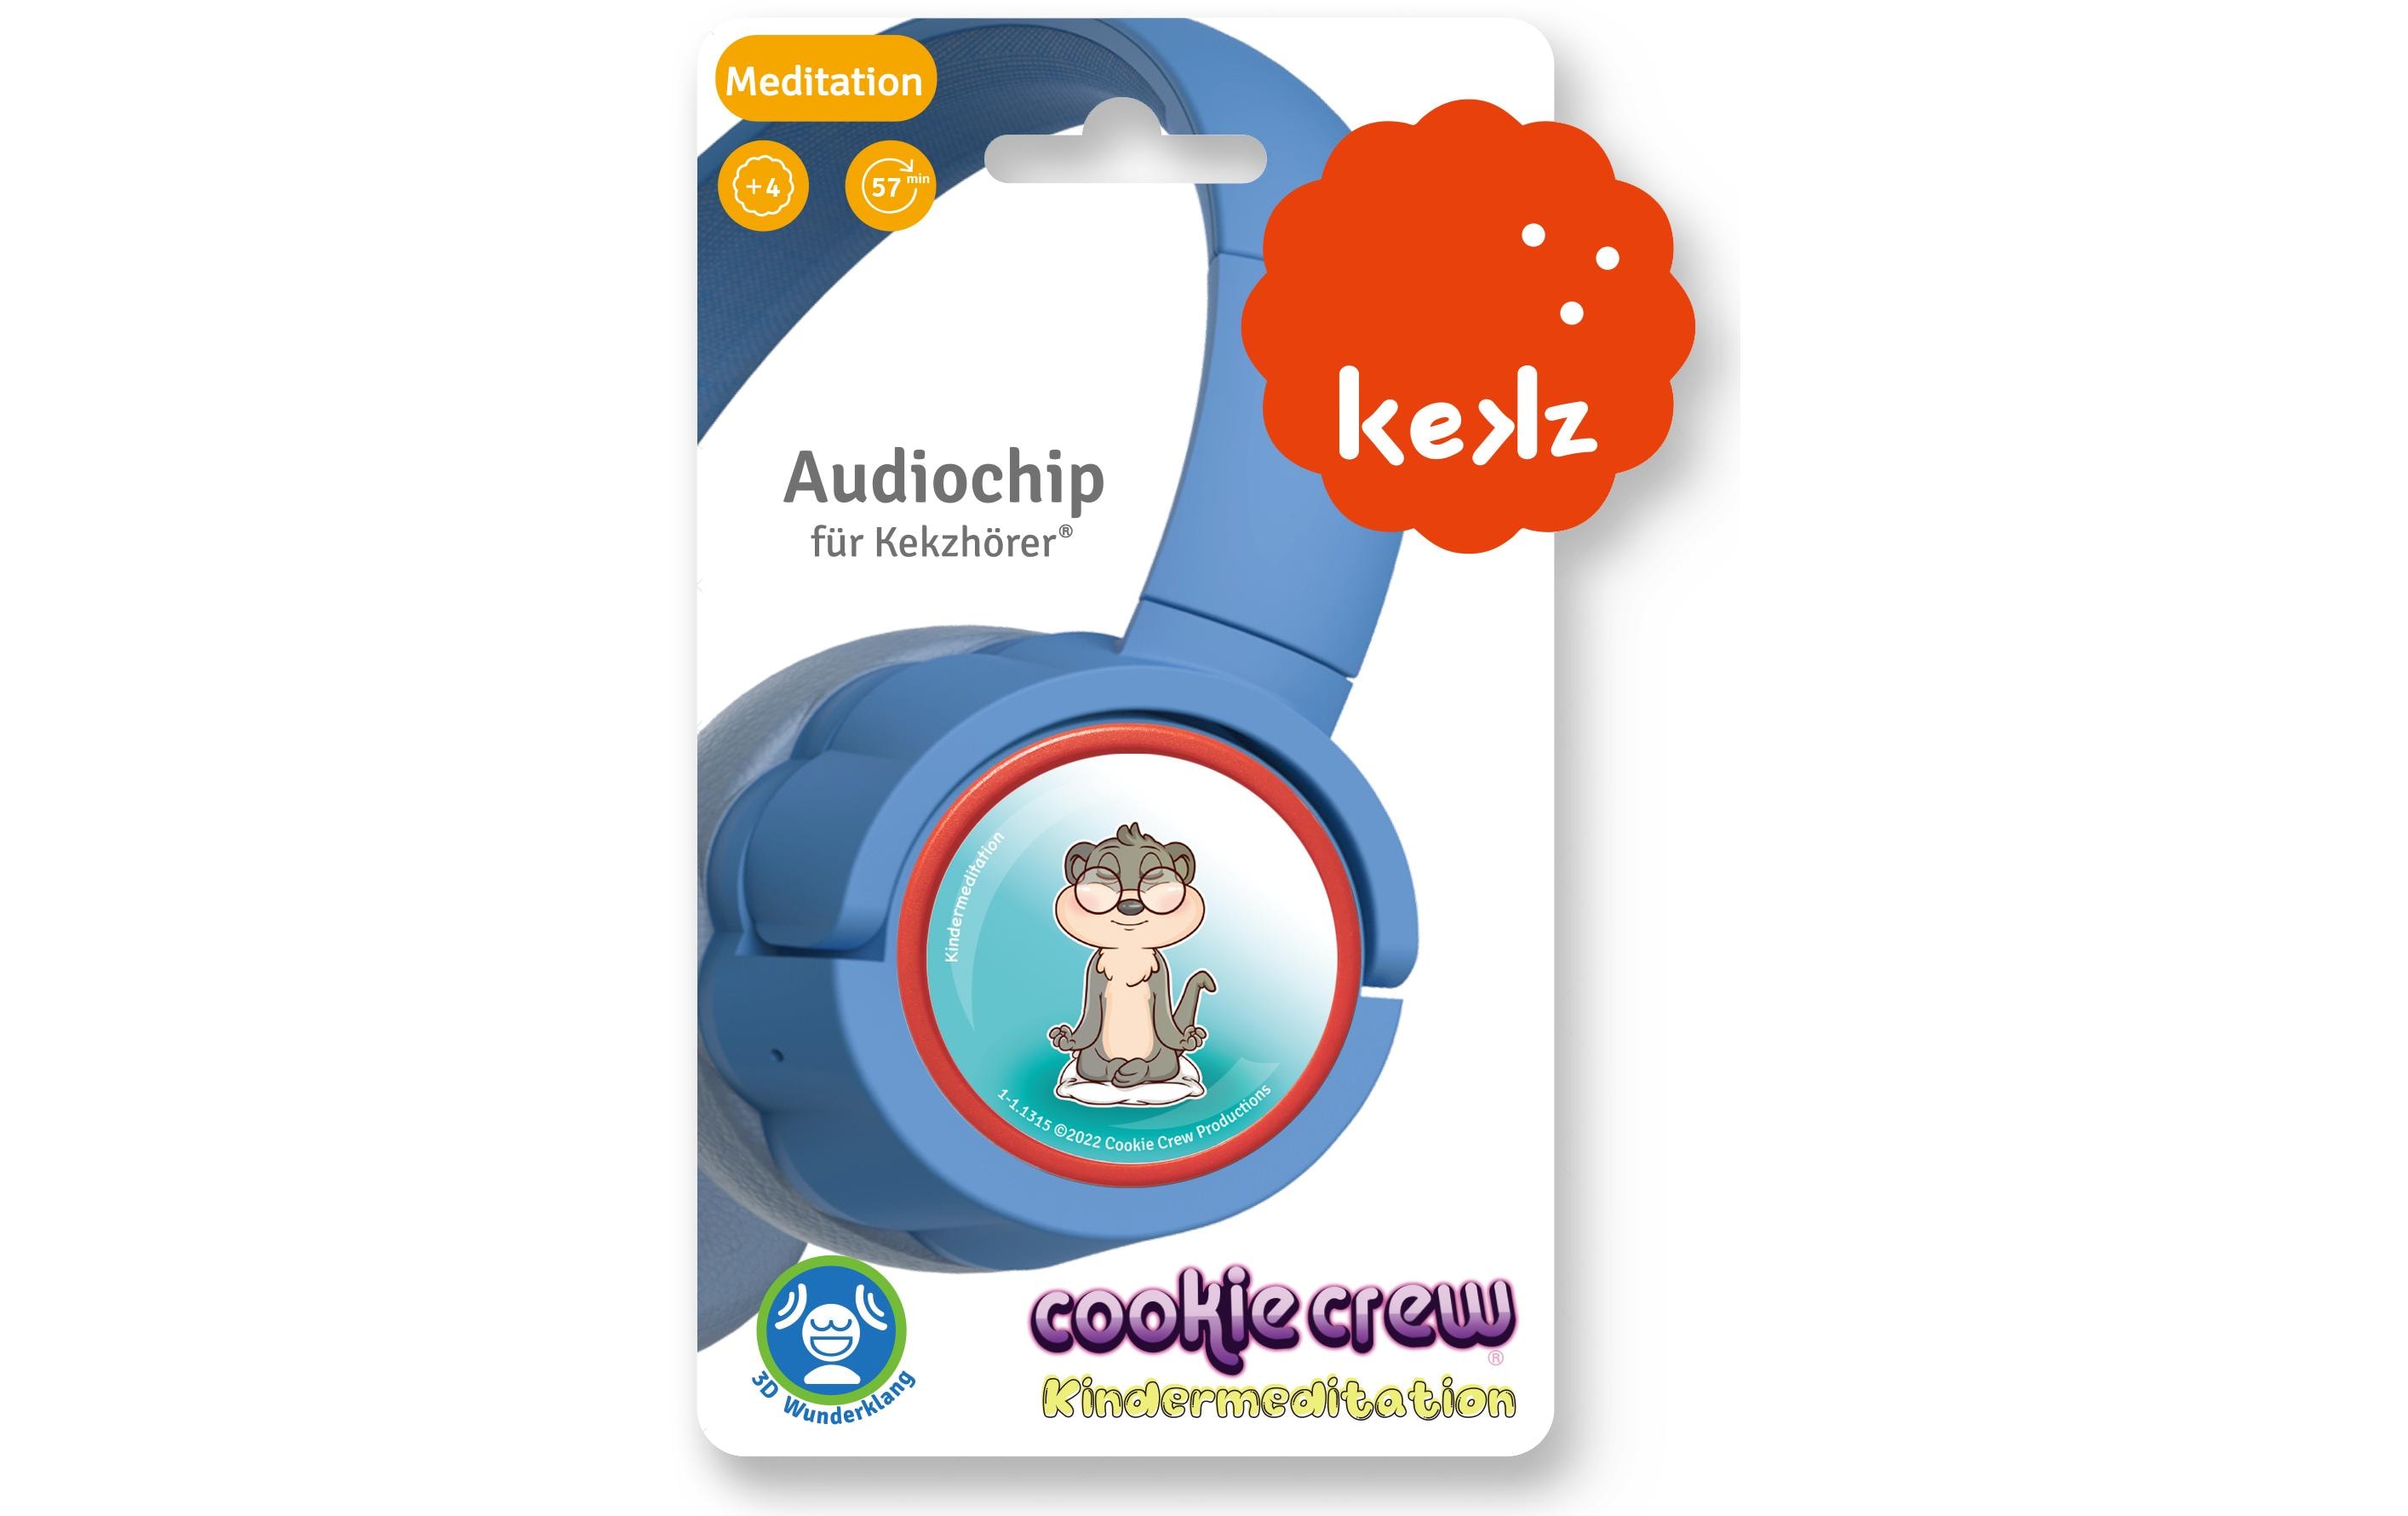 Kekz Audiochip Cookie Crew – Meditation